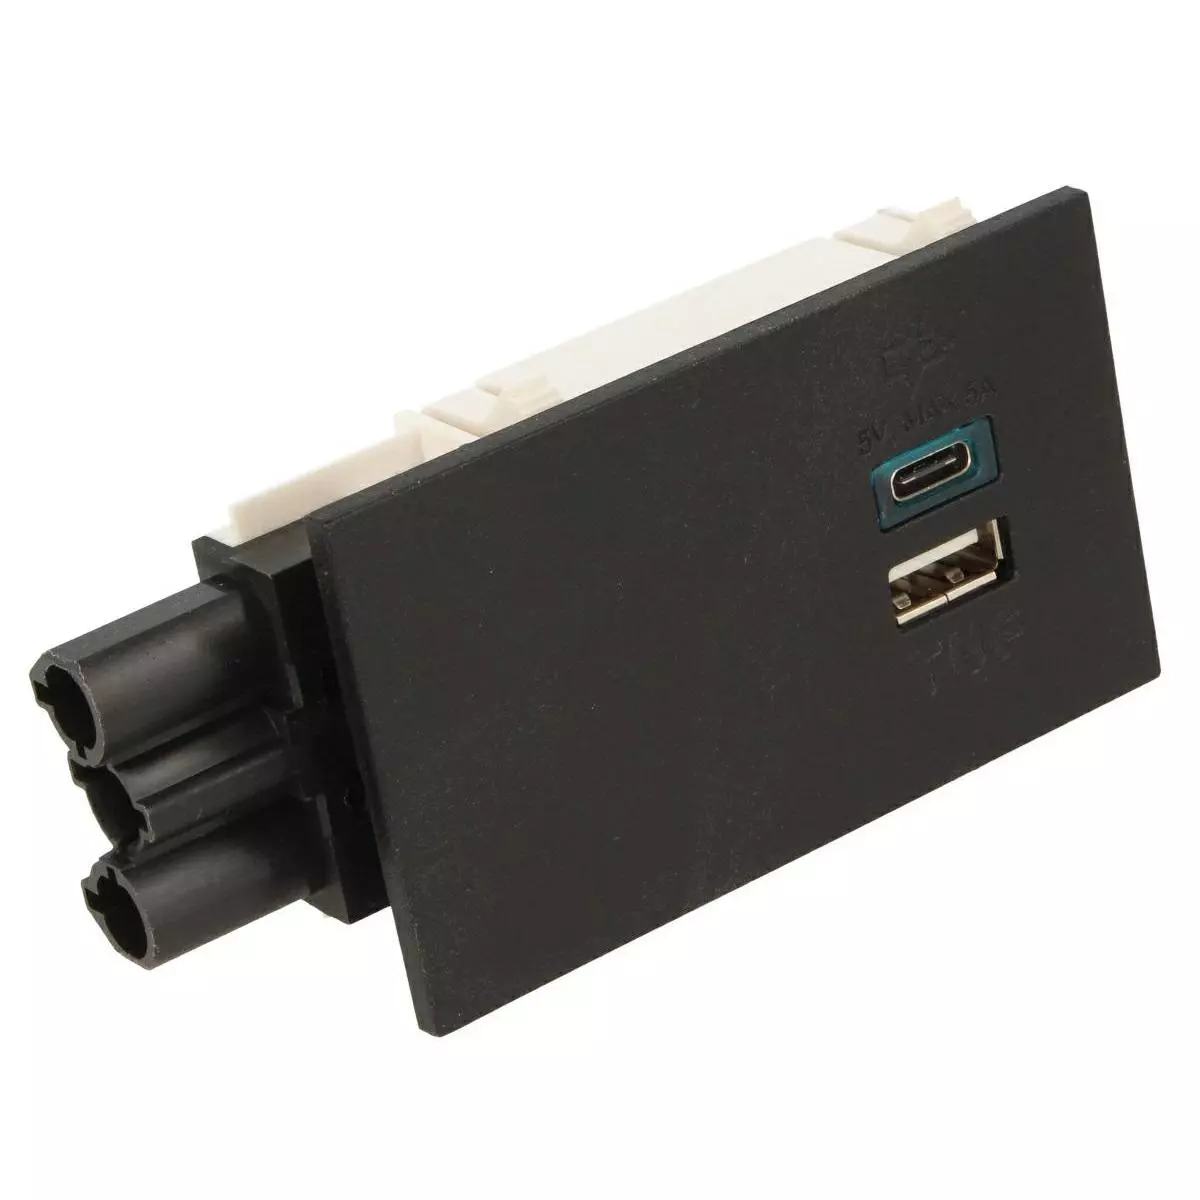 QF-TUF USB A+C czarny